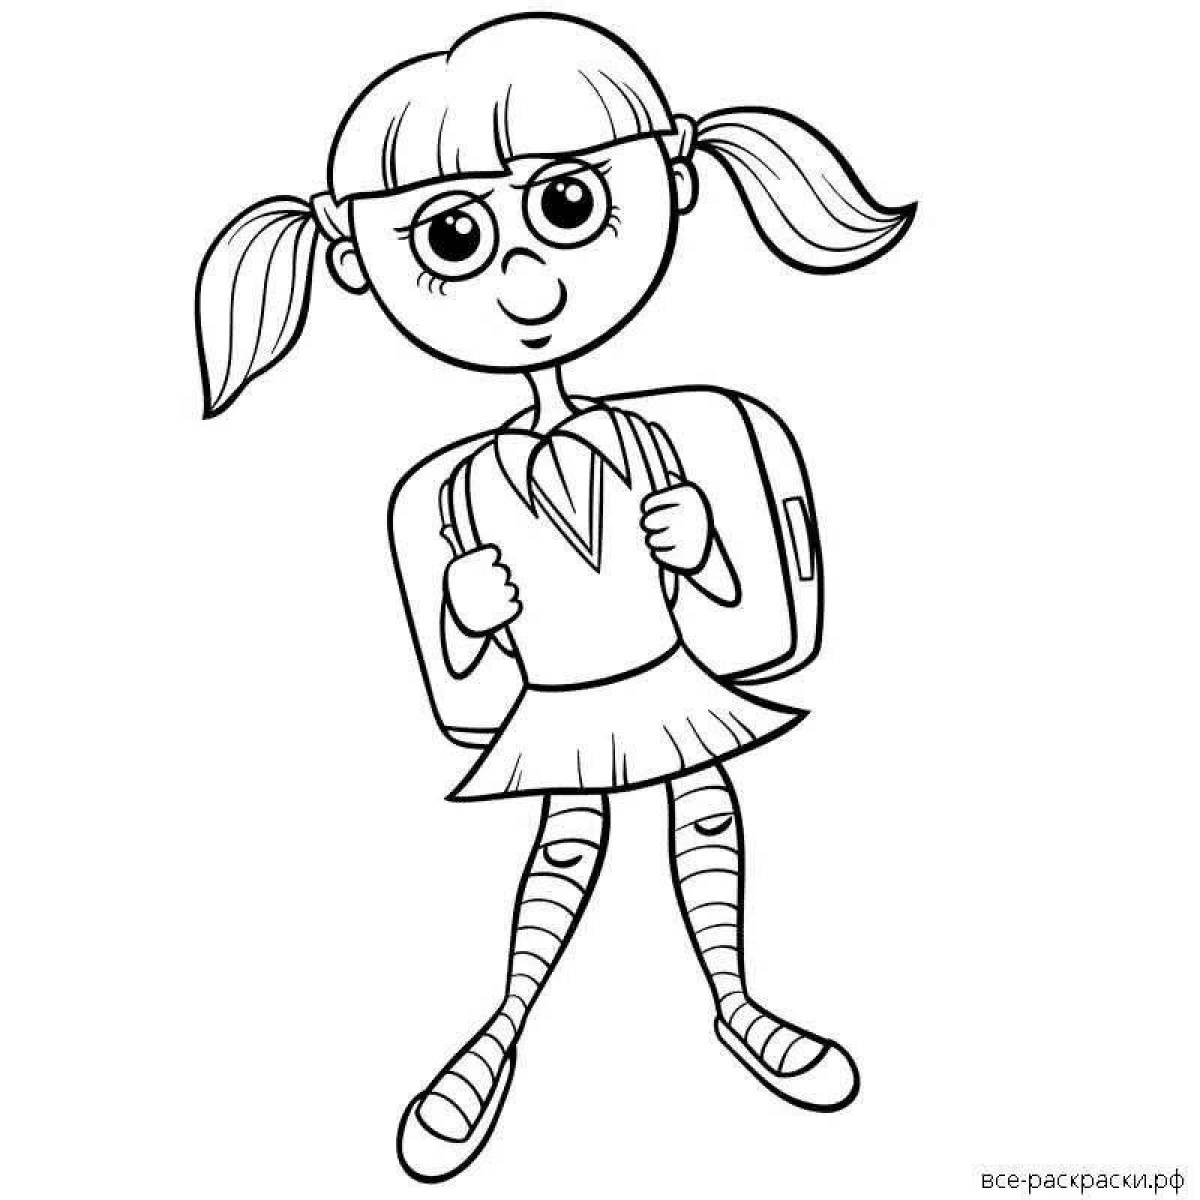 Coloring page confident schoolgirl